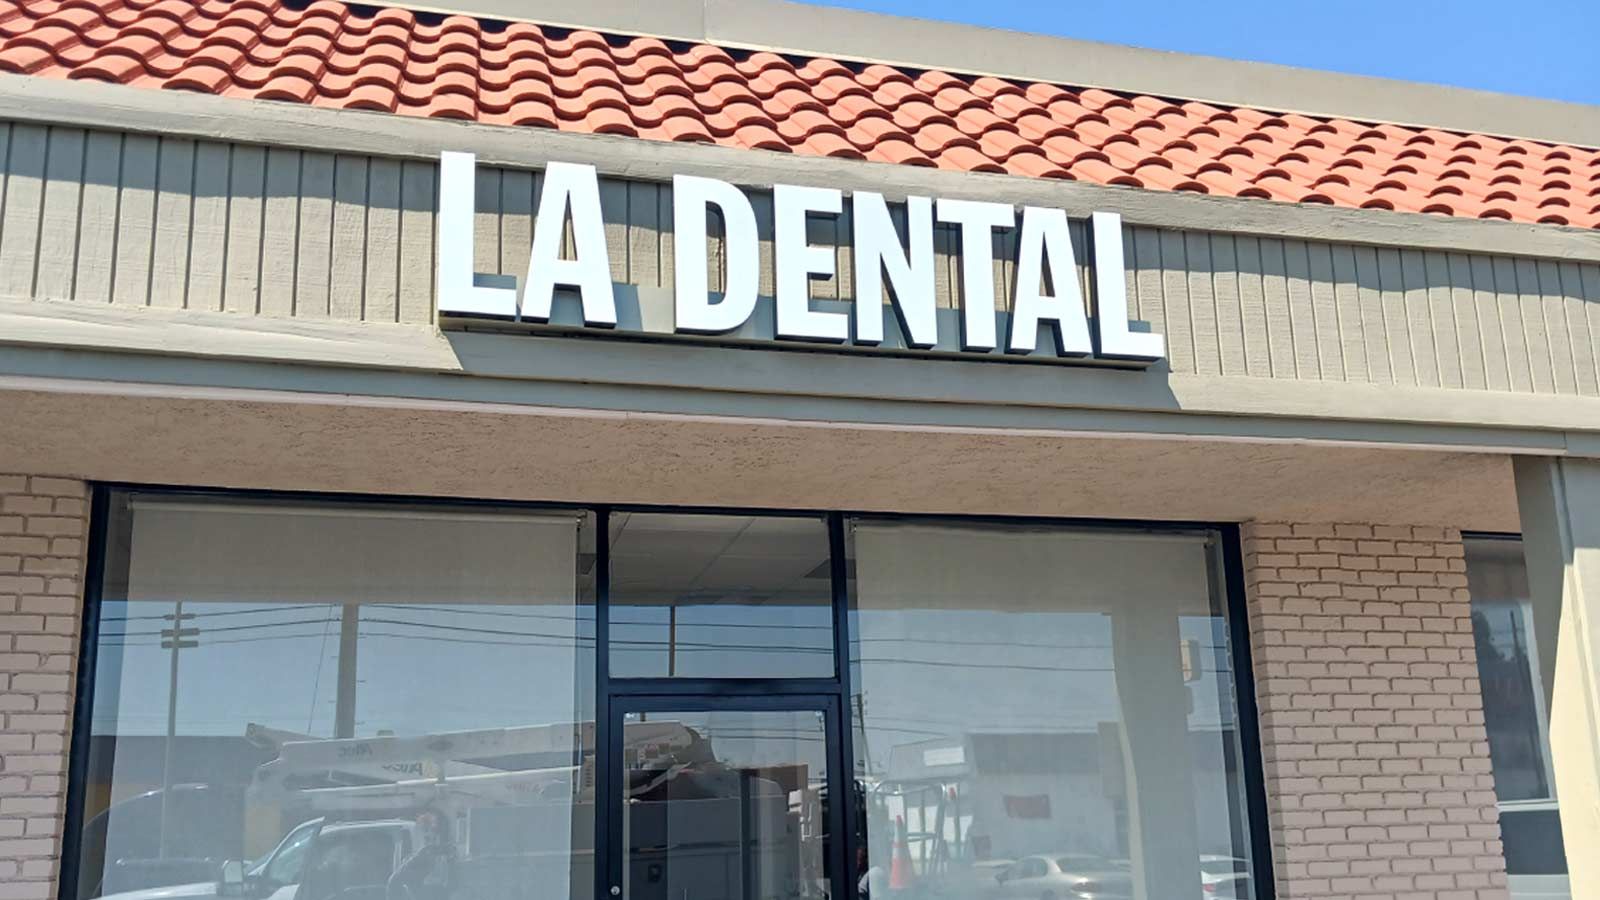 LA Dental channel letters set up outdoors